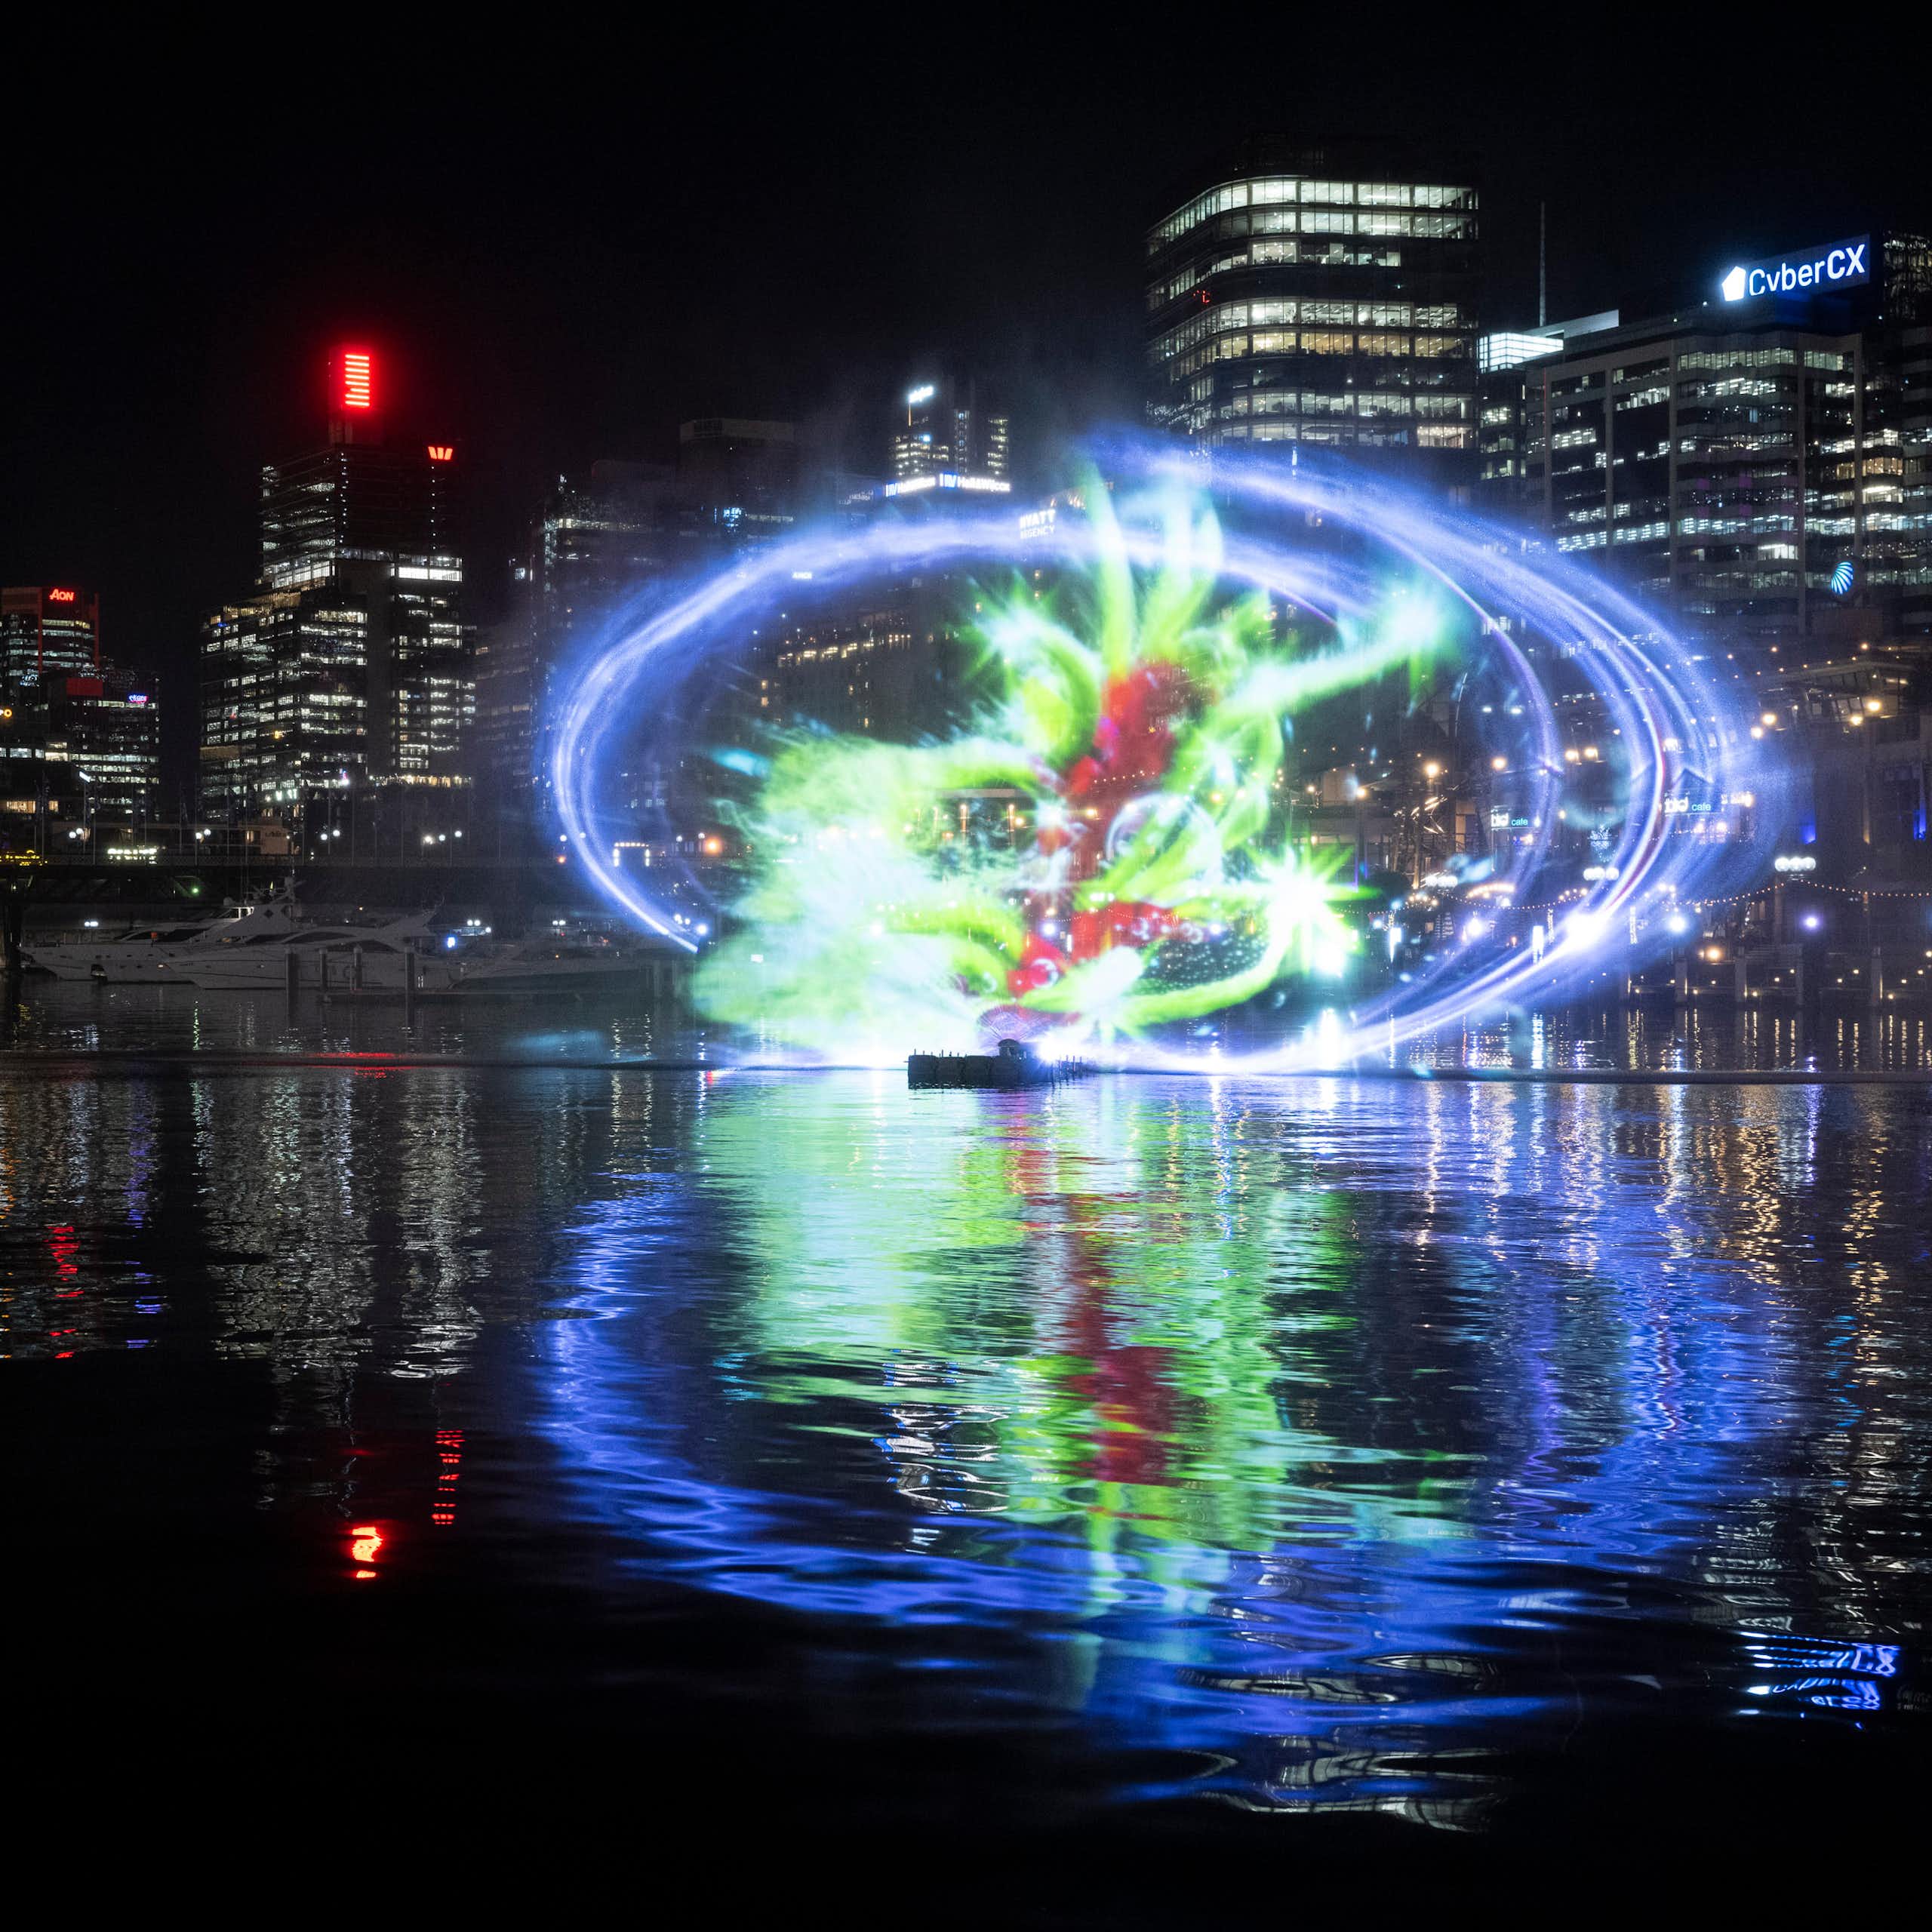 Glowing light art installation against city backdrop